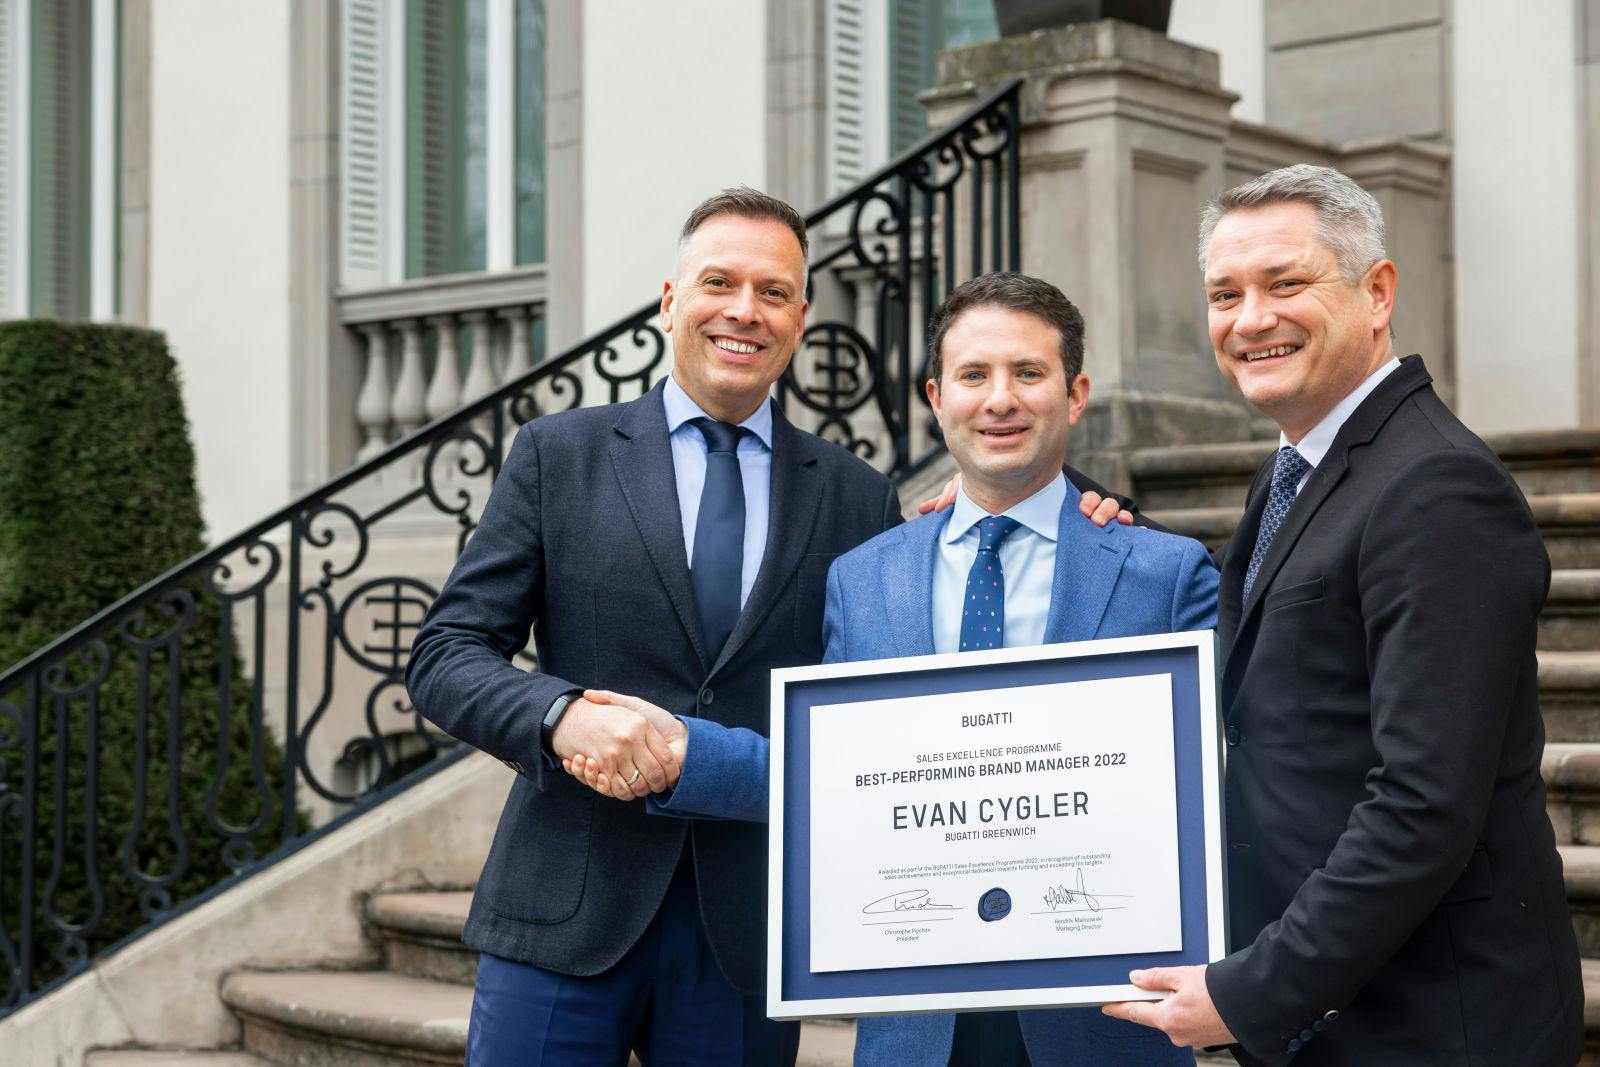 Hendrik Malinowski, Managing Director of Bugatti, and Christophe Piochon, President of Bugatti, congratulate Evan Cygler on his title of ‘Best Performing Brand Manager’ 2022.